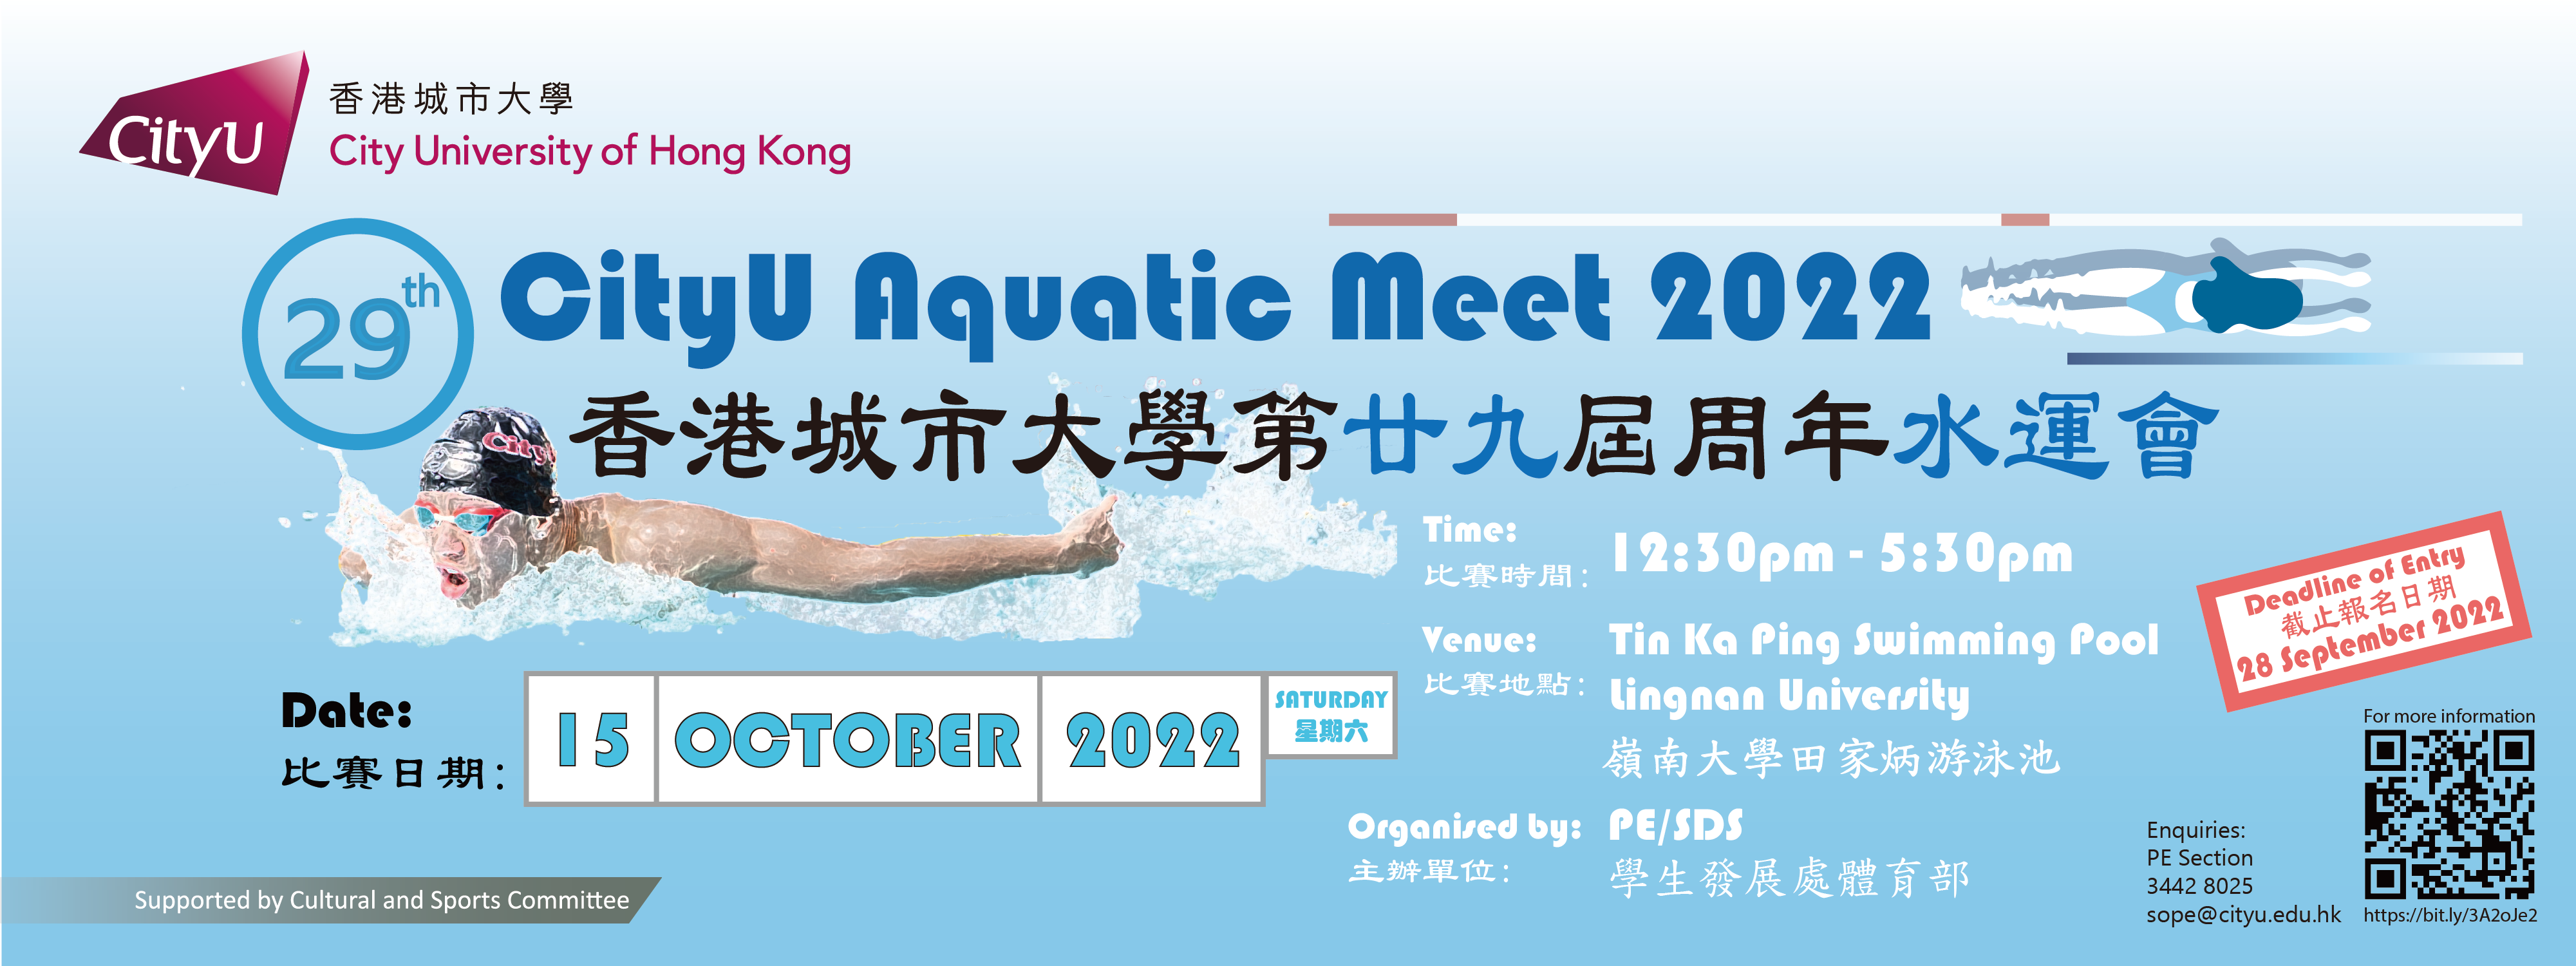 Annual Aquatic Meet